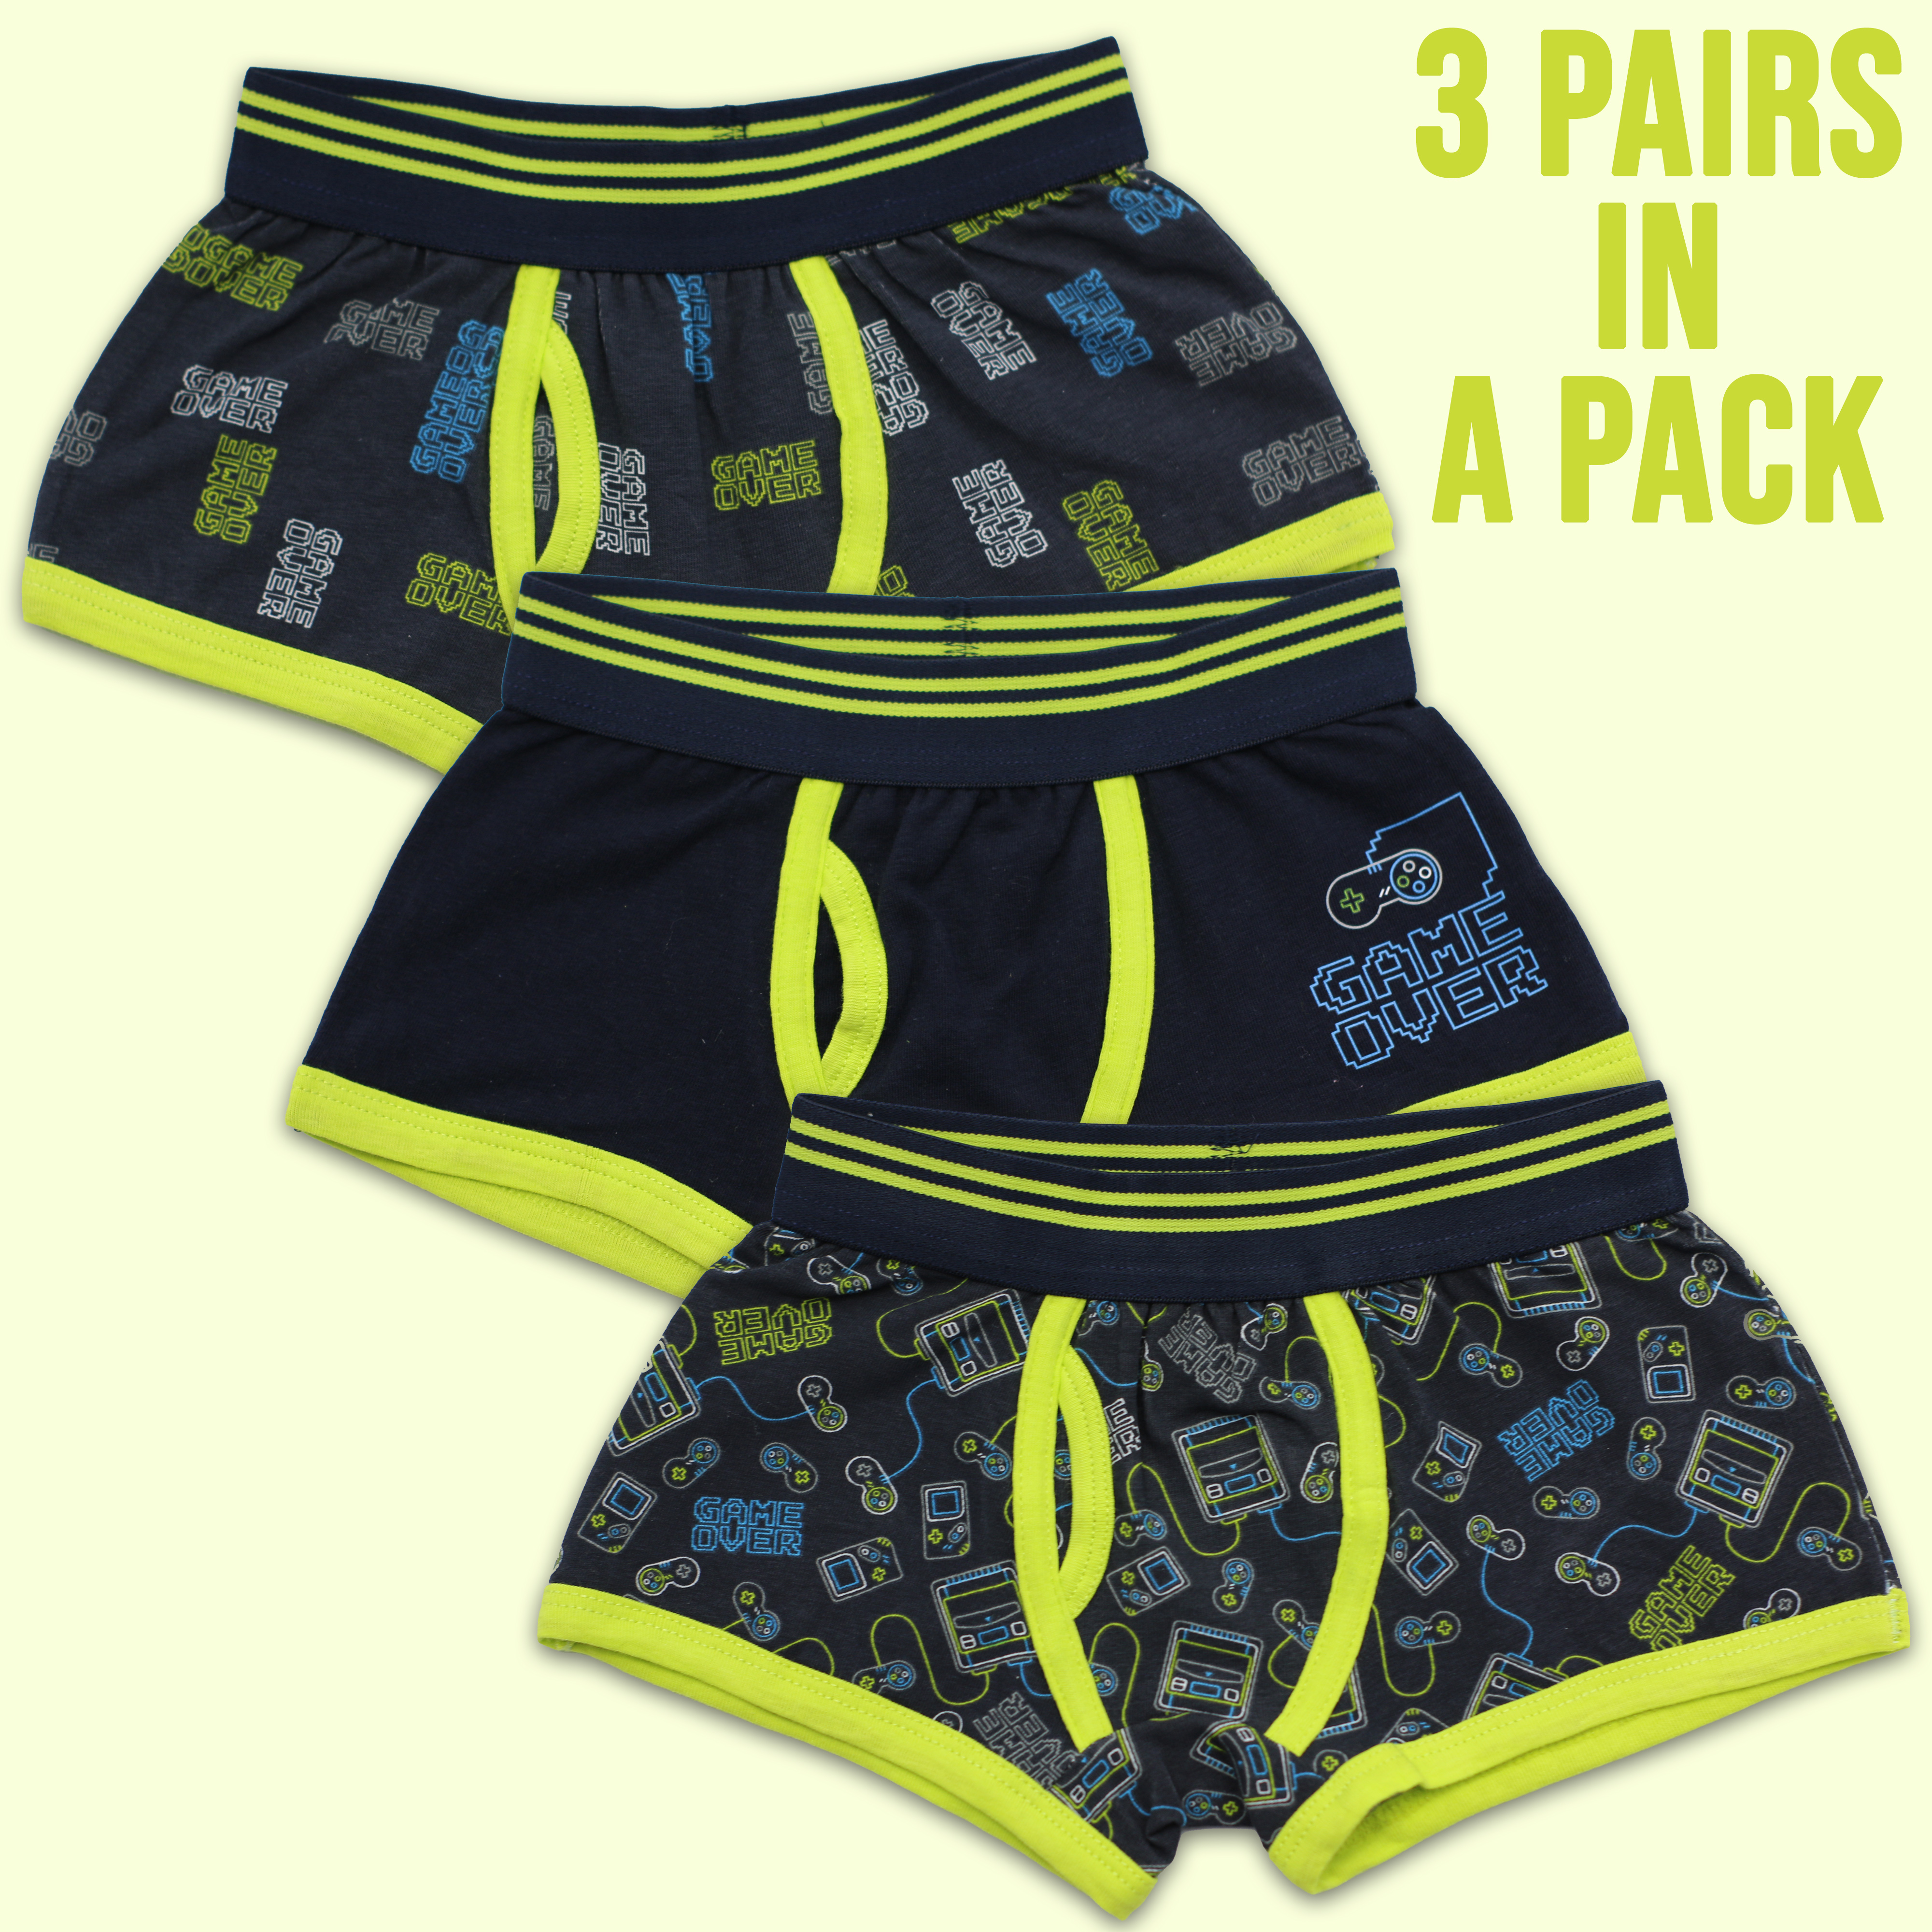 Boys 3 Pack Boxers Pants Kids Cotton Rich Underwear 3 PACK Brief Shorts Age 2-13 